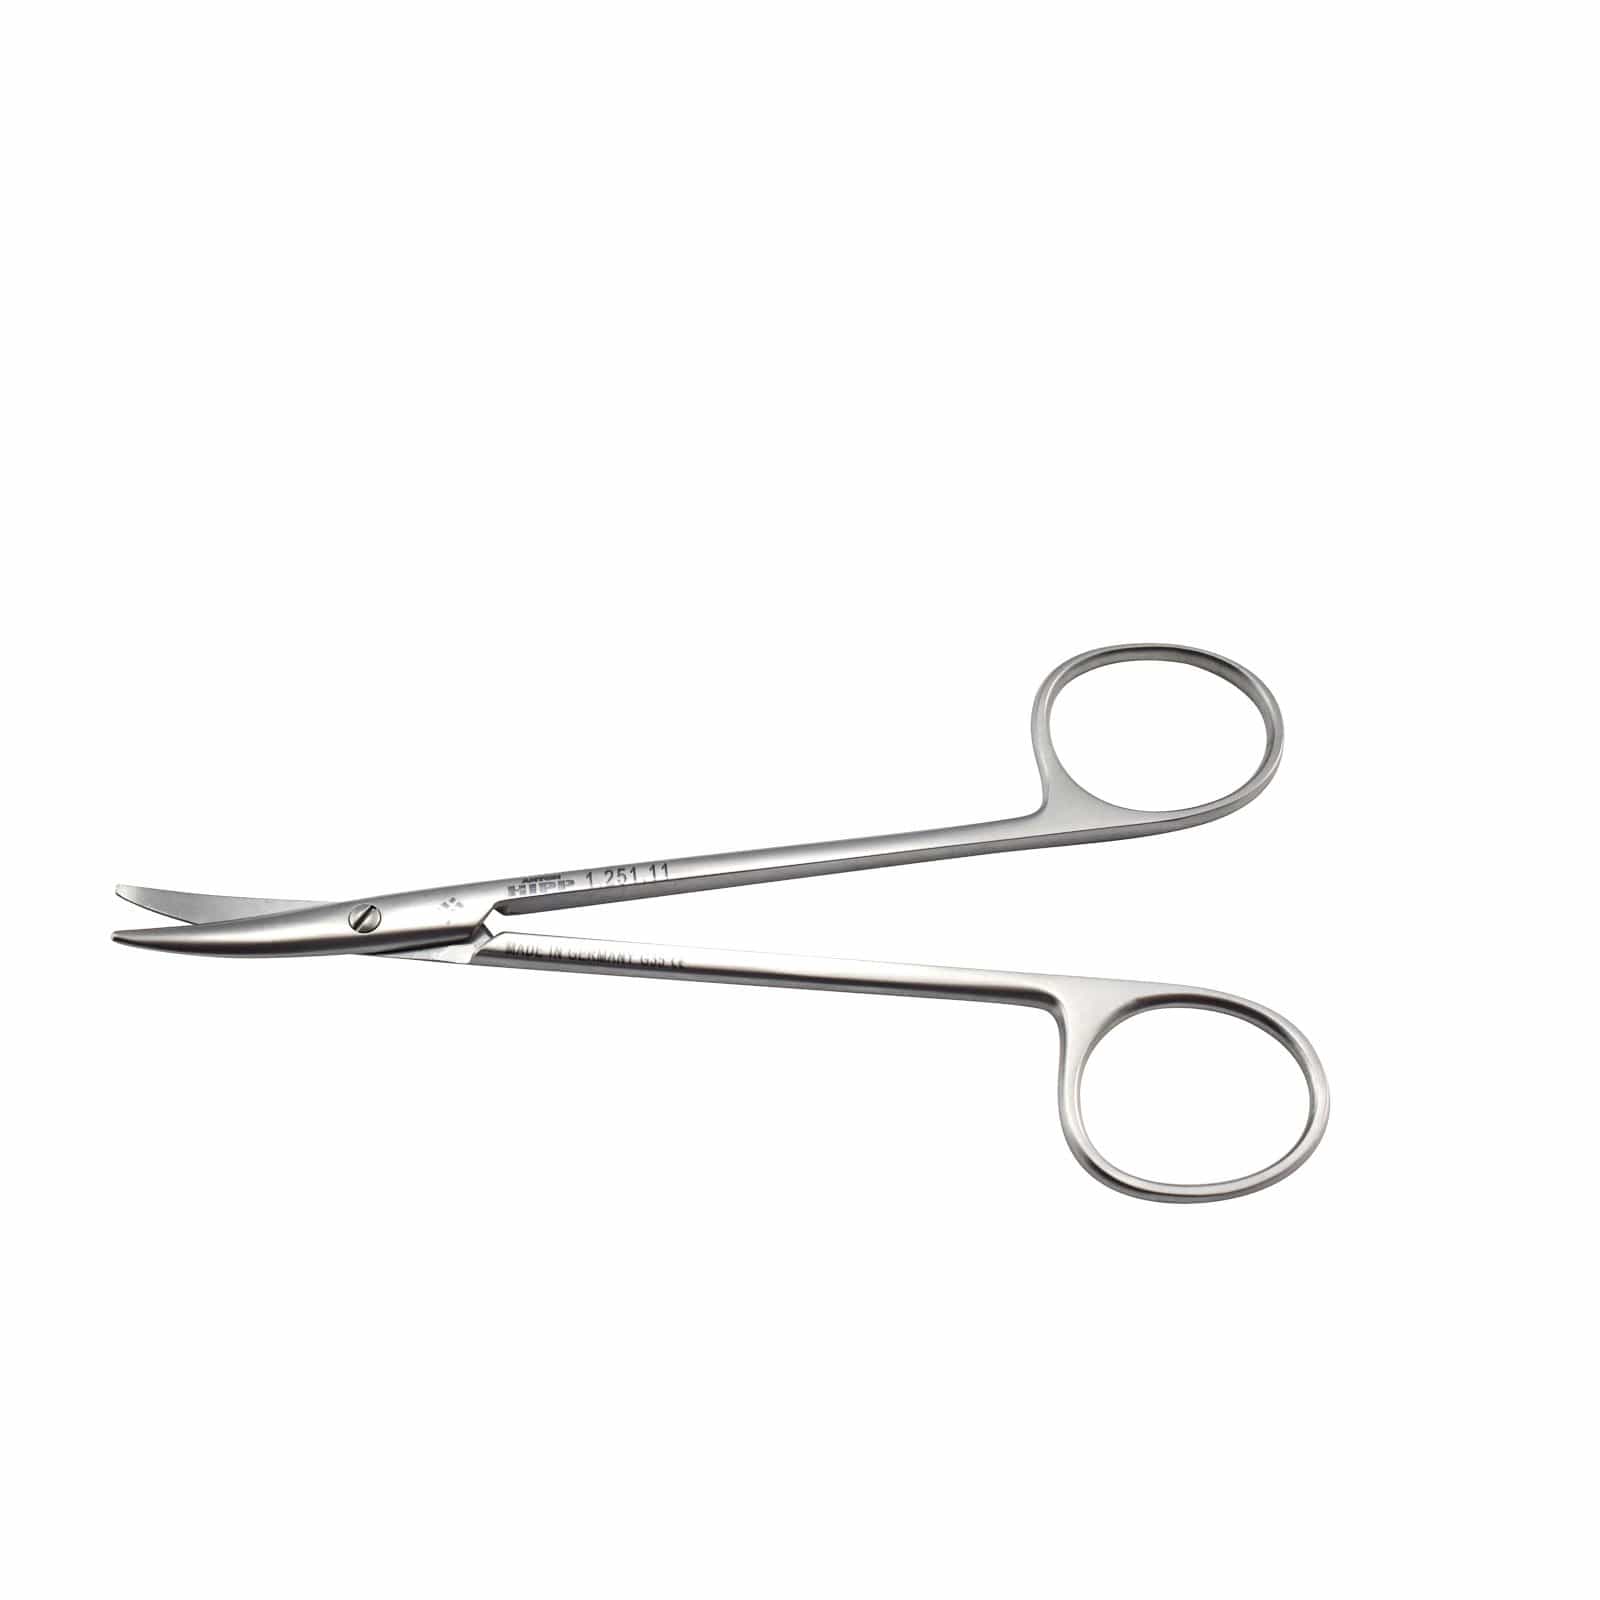 Hipp Surgical Instruments 11cm / Curved / Delicate Hipp Strabismus Scissors